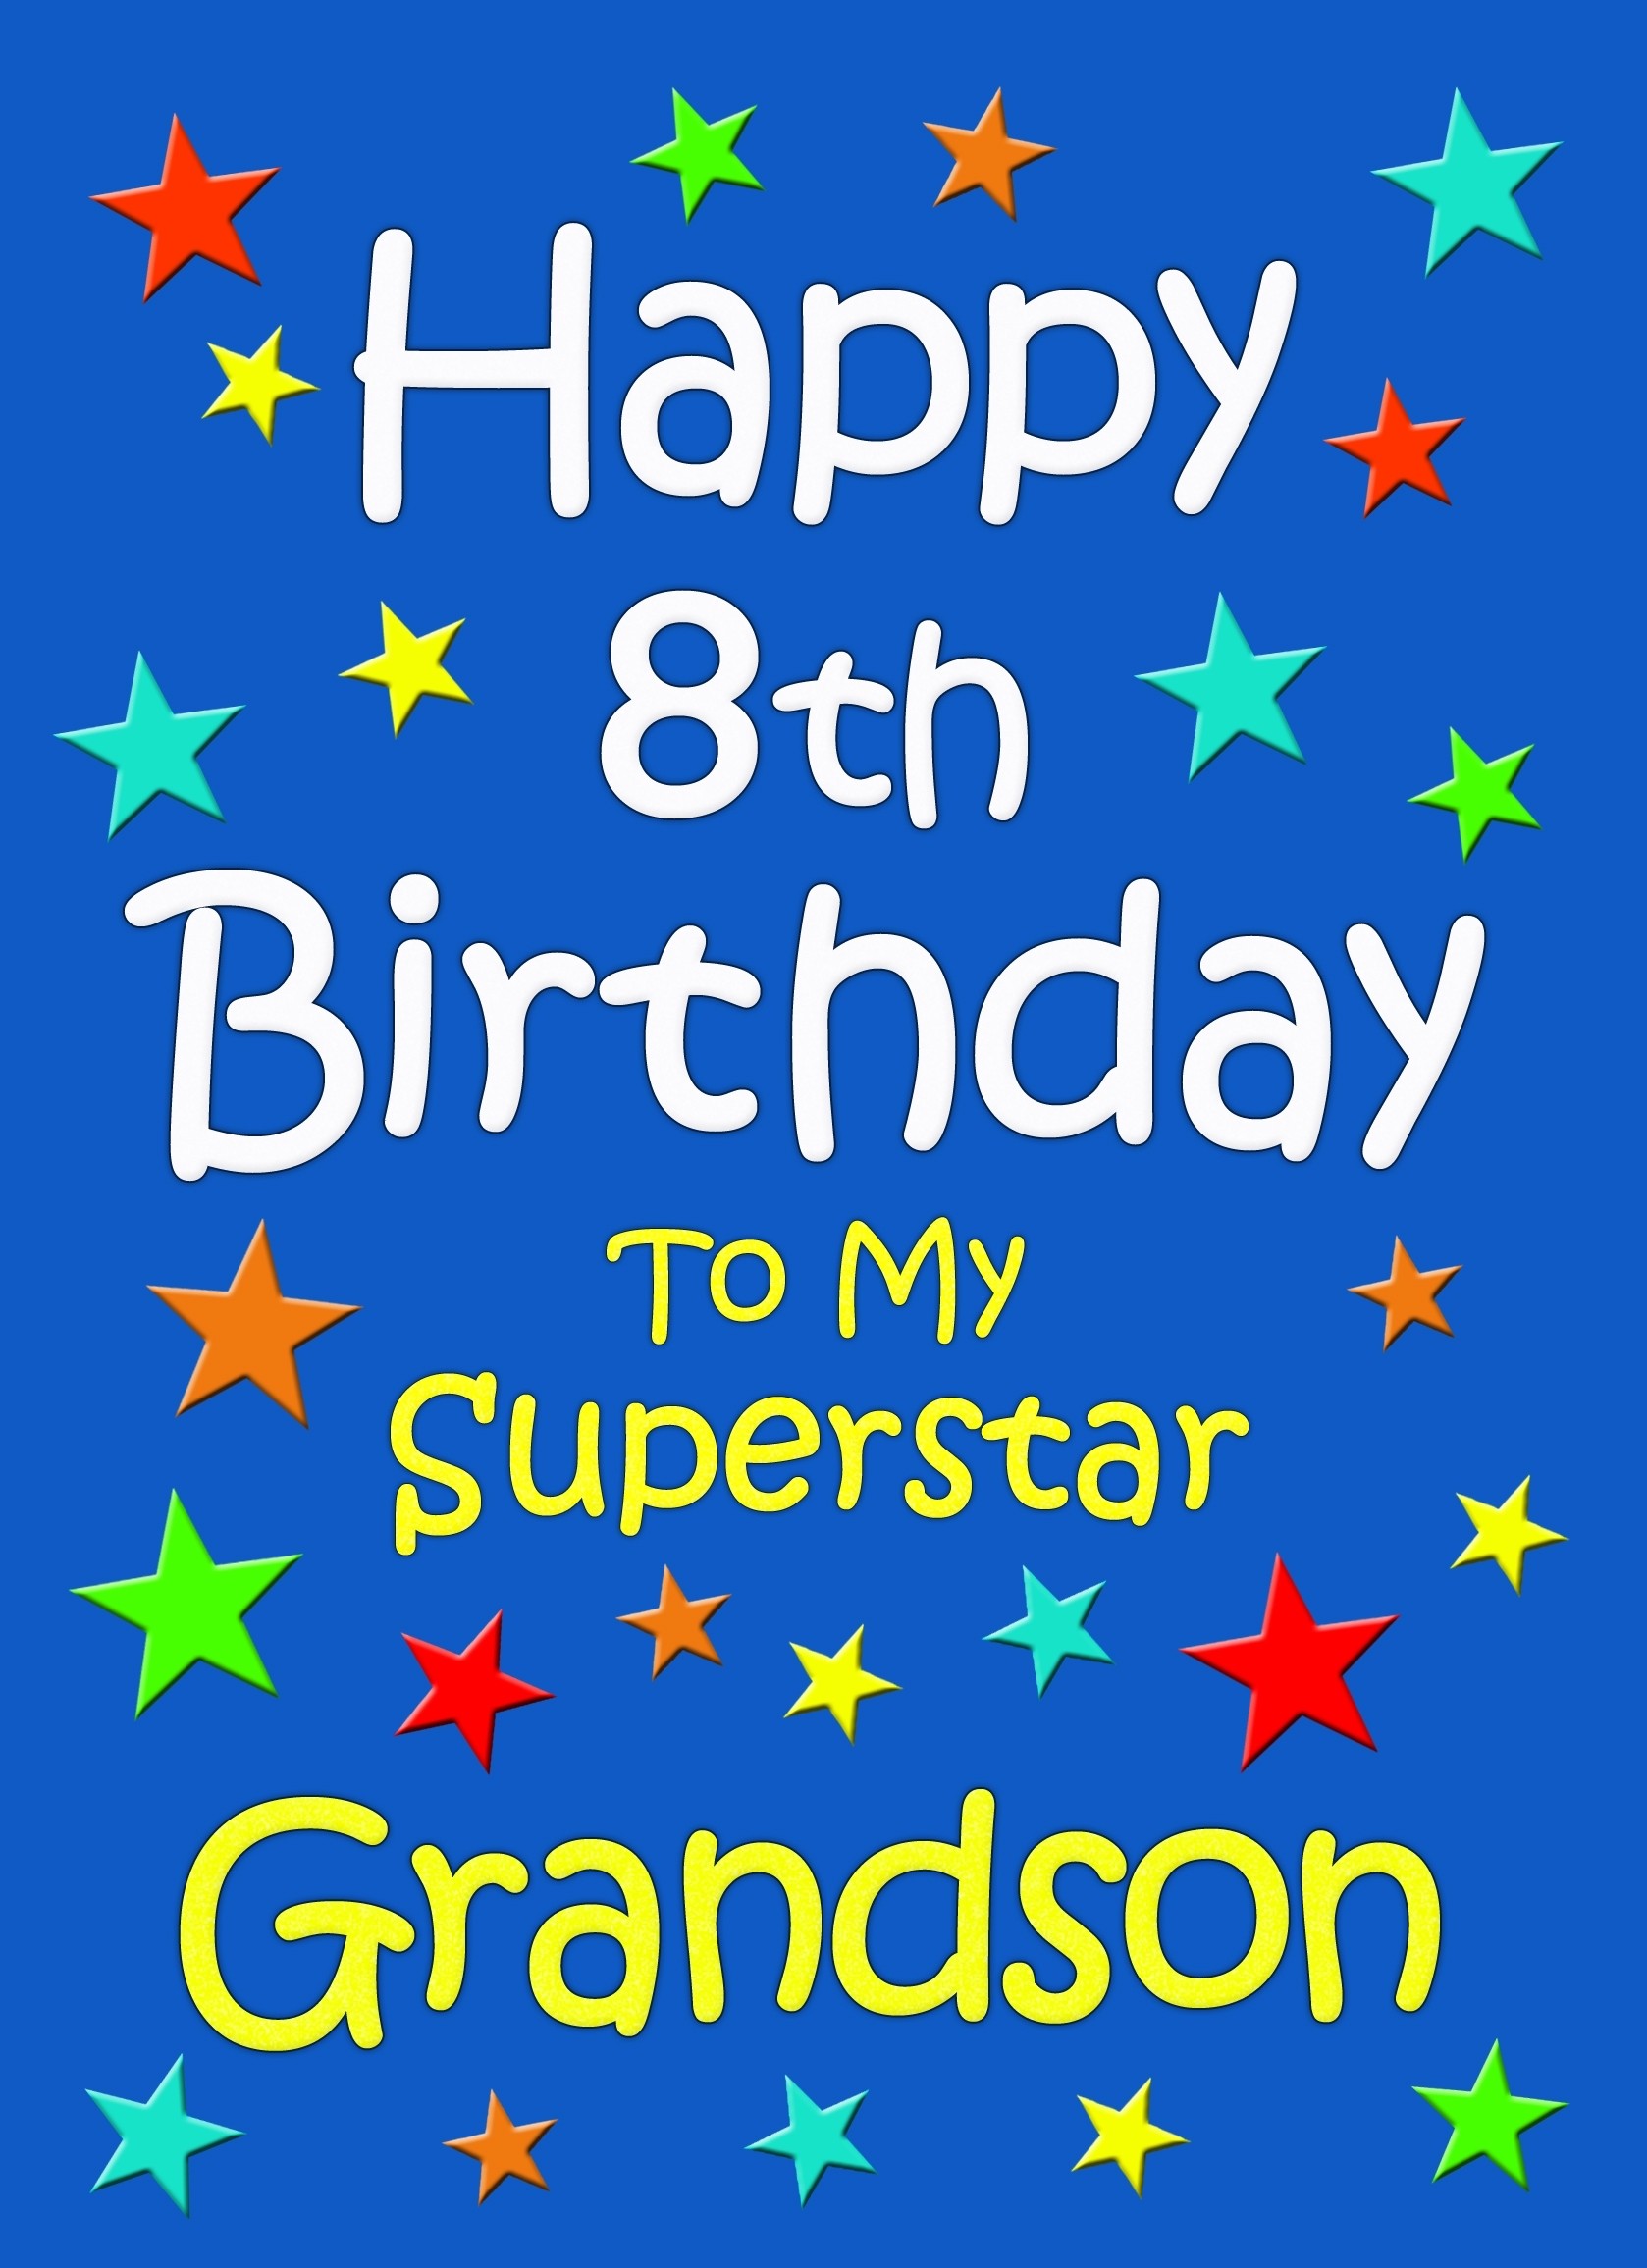 Grandson 8th Birthday Card (Blue)